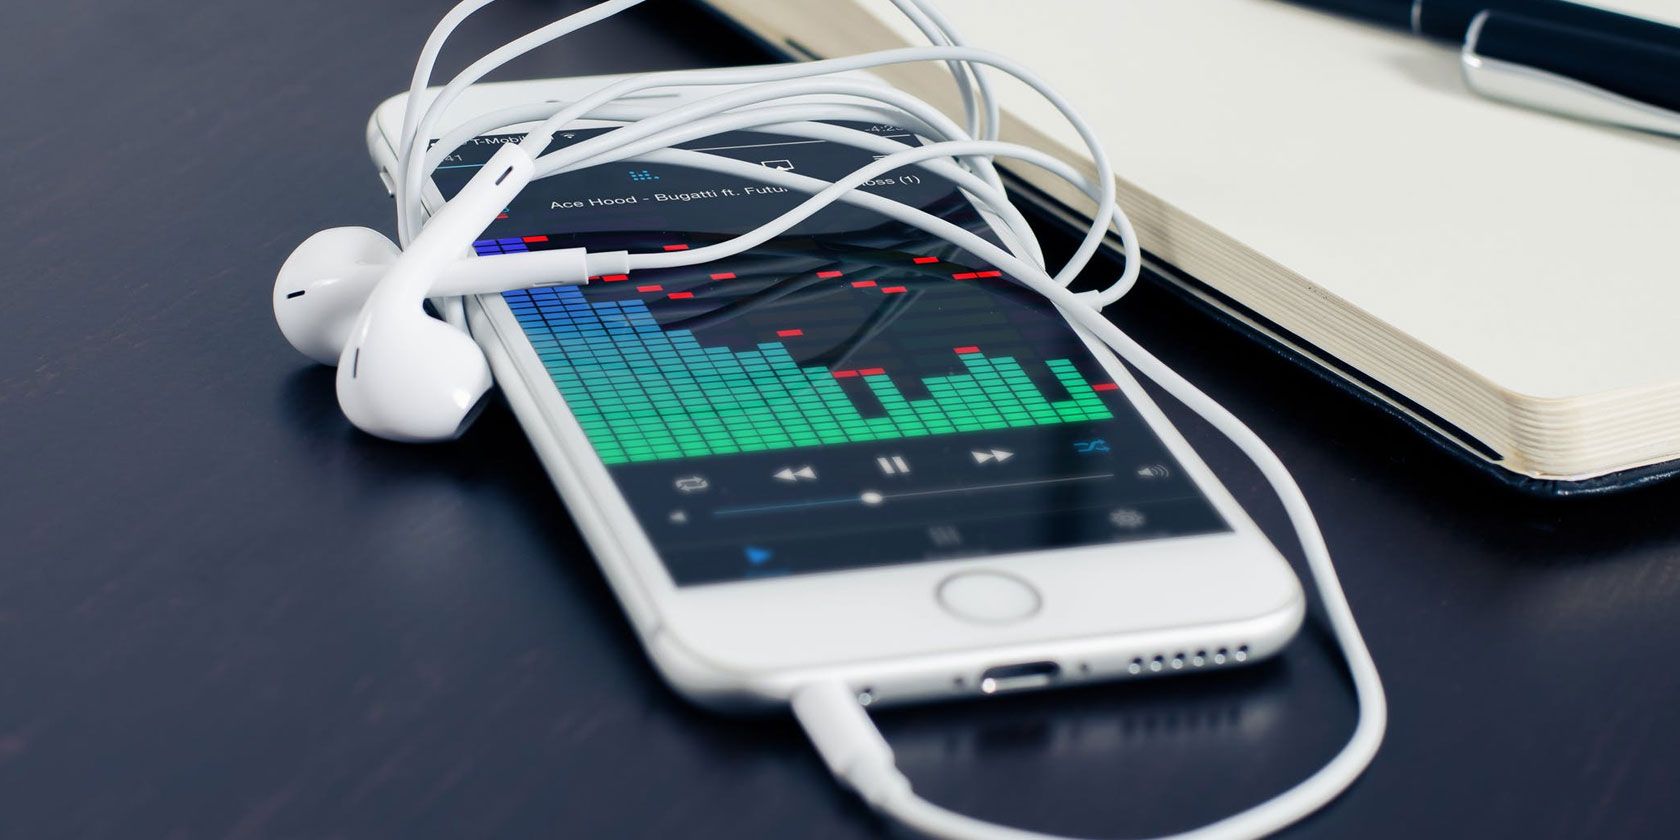 iphone music player app headphone